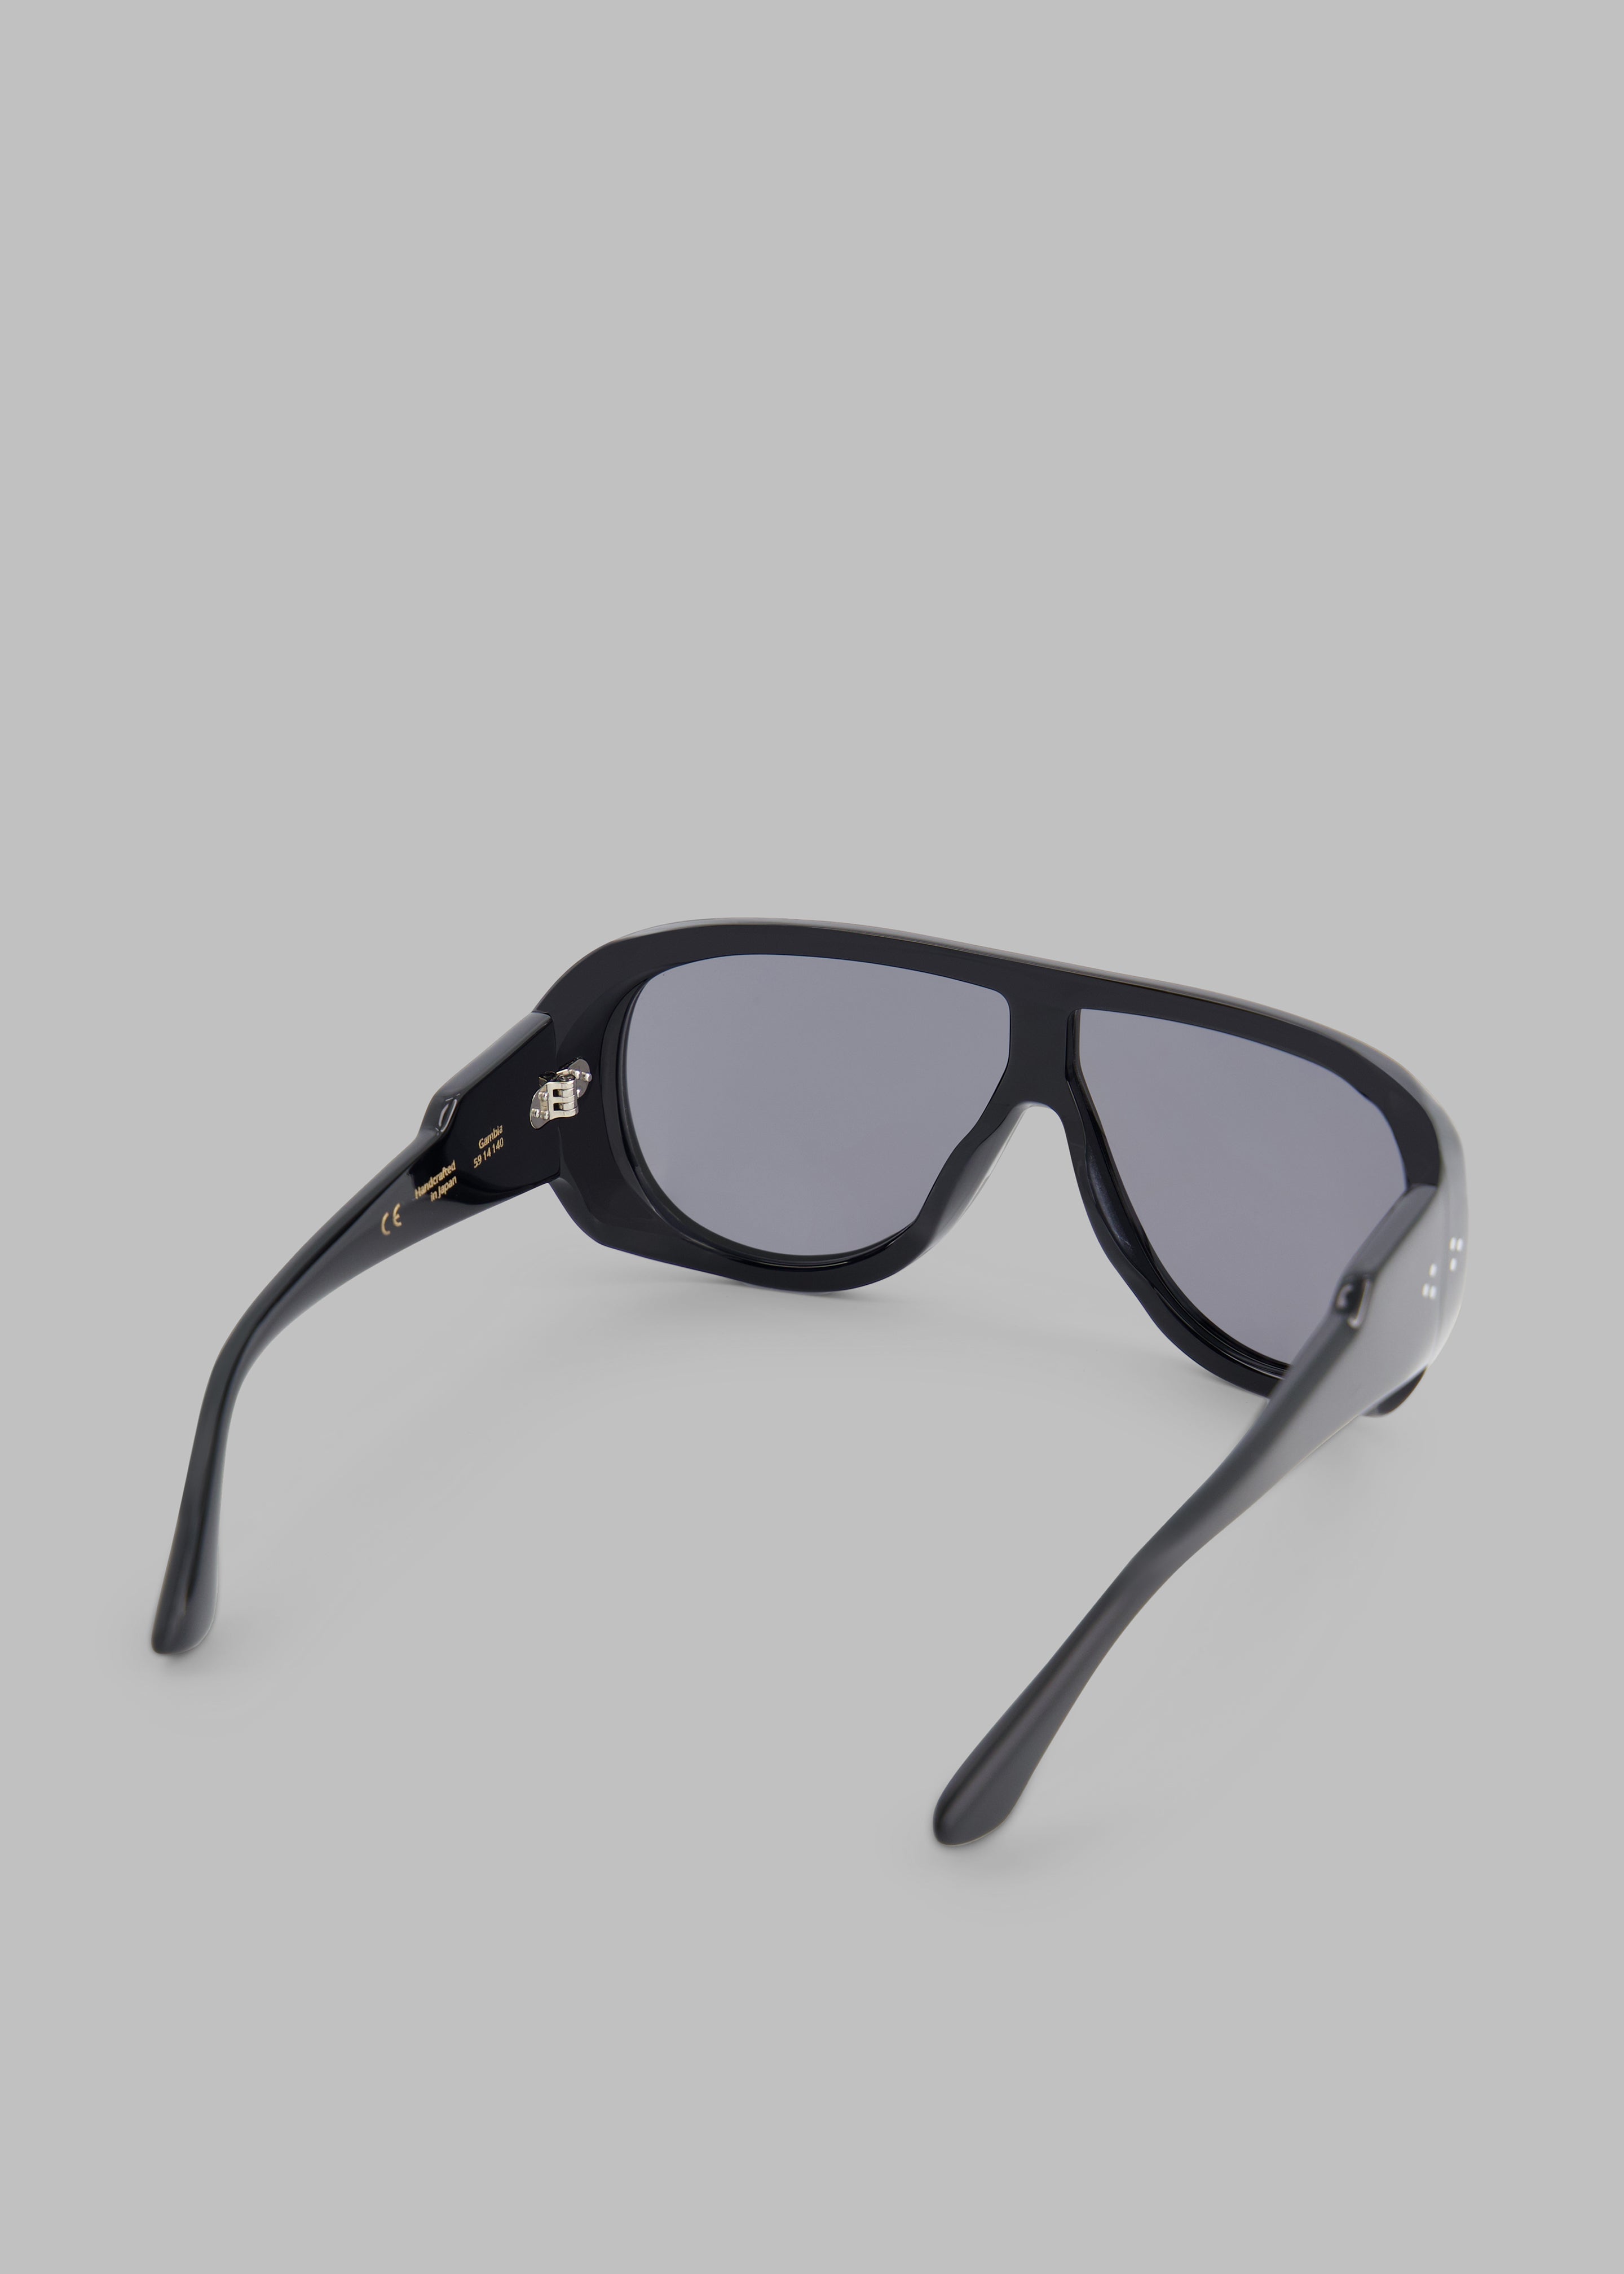 Port Tanger Gambia Sunglasses - Black Acetate/Black Lens - 13